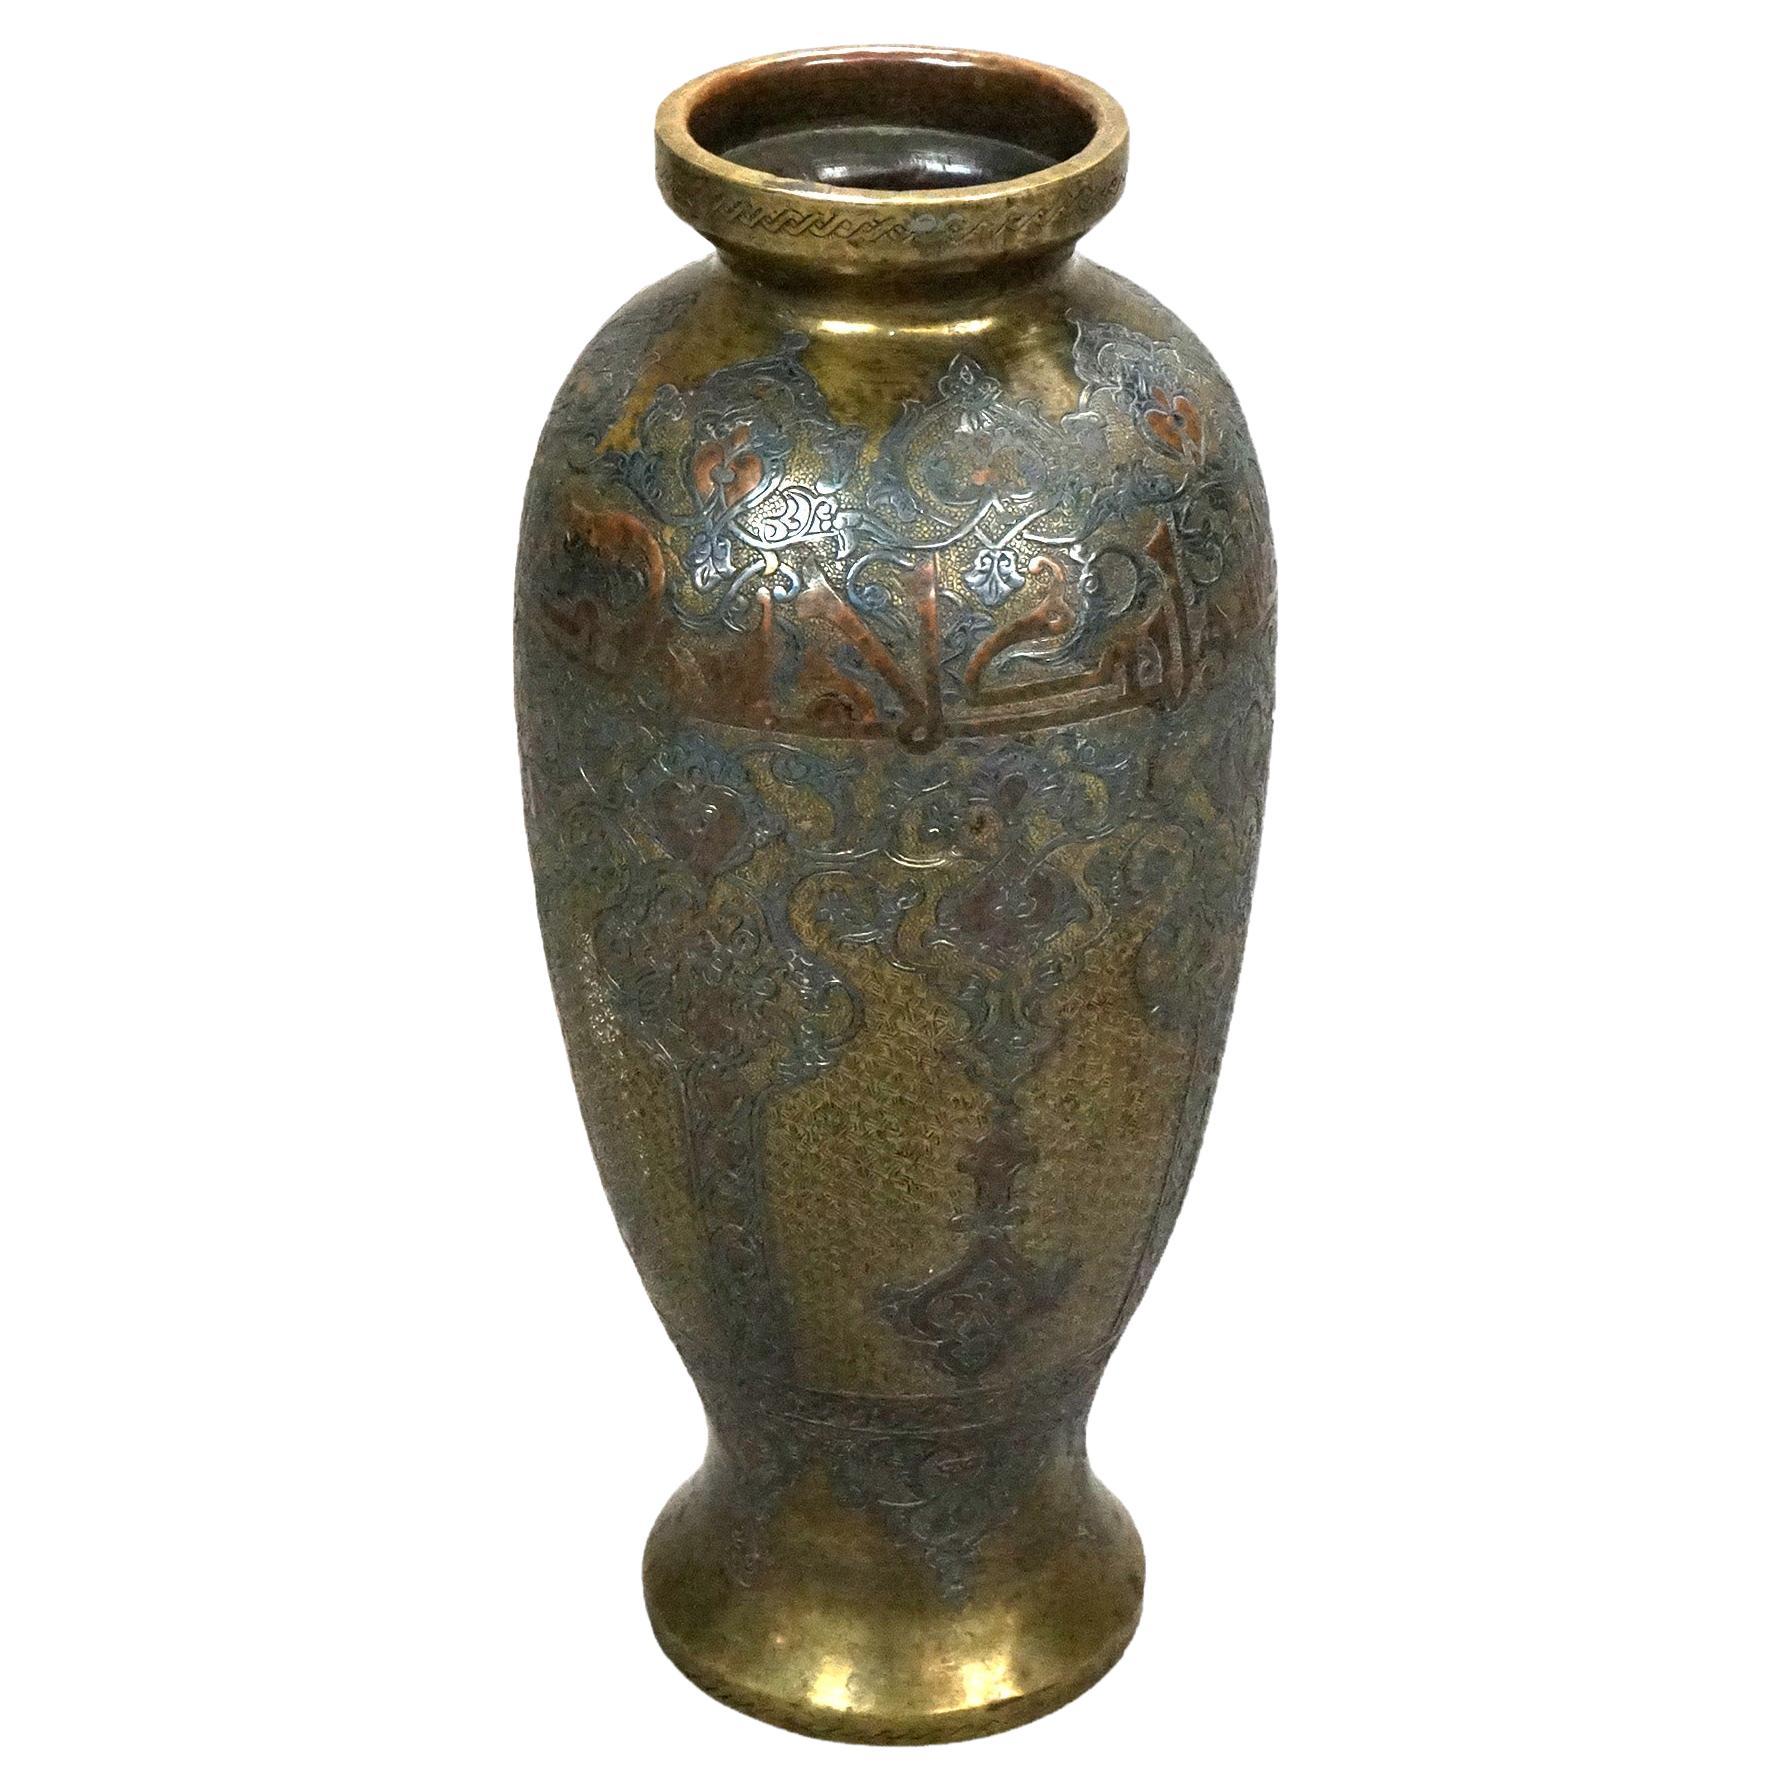 Antique Persian Silver & Copper Inlaid Bronze Vase 18th-19th C